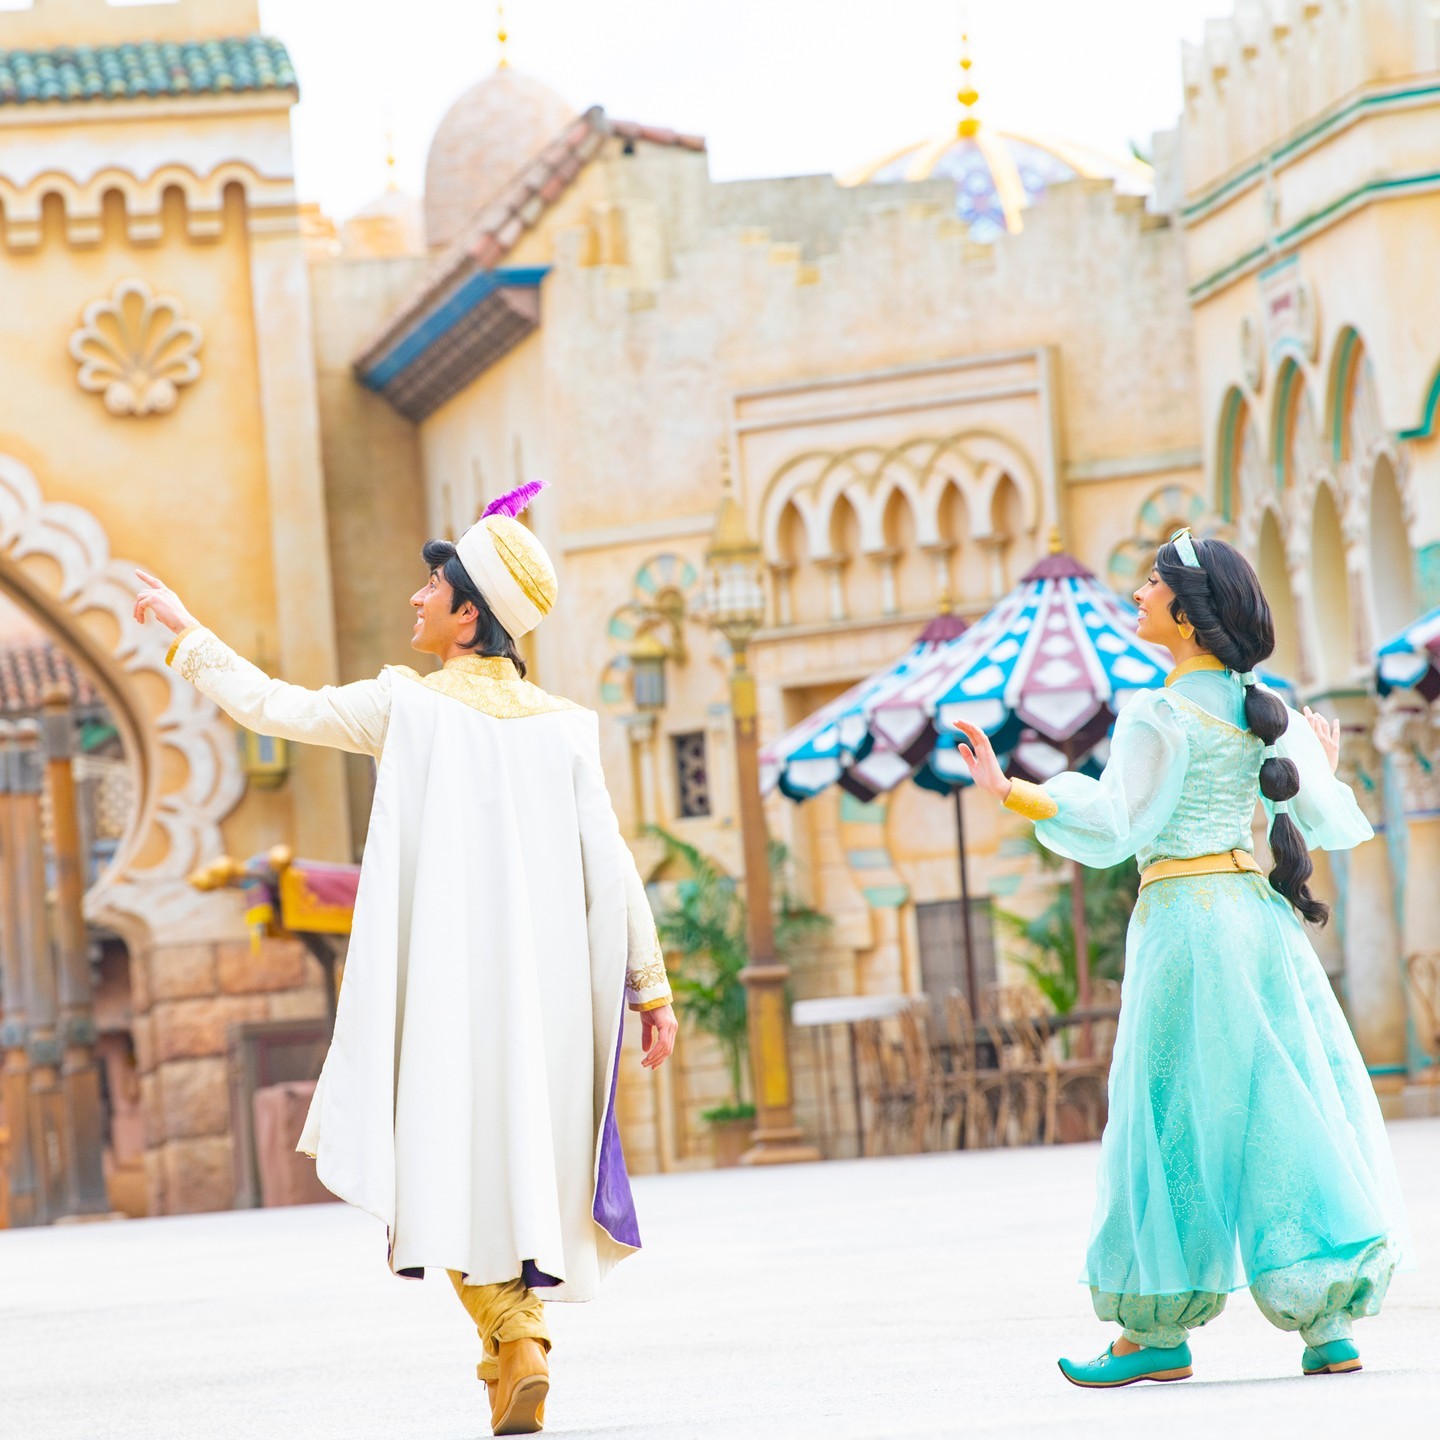 Aladdin,what did you find?
2人なら、どこでも素敵な発見が♡
#jasmine #aladdin #arabiancoast...のイメージ